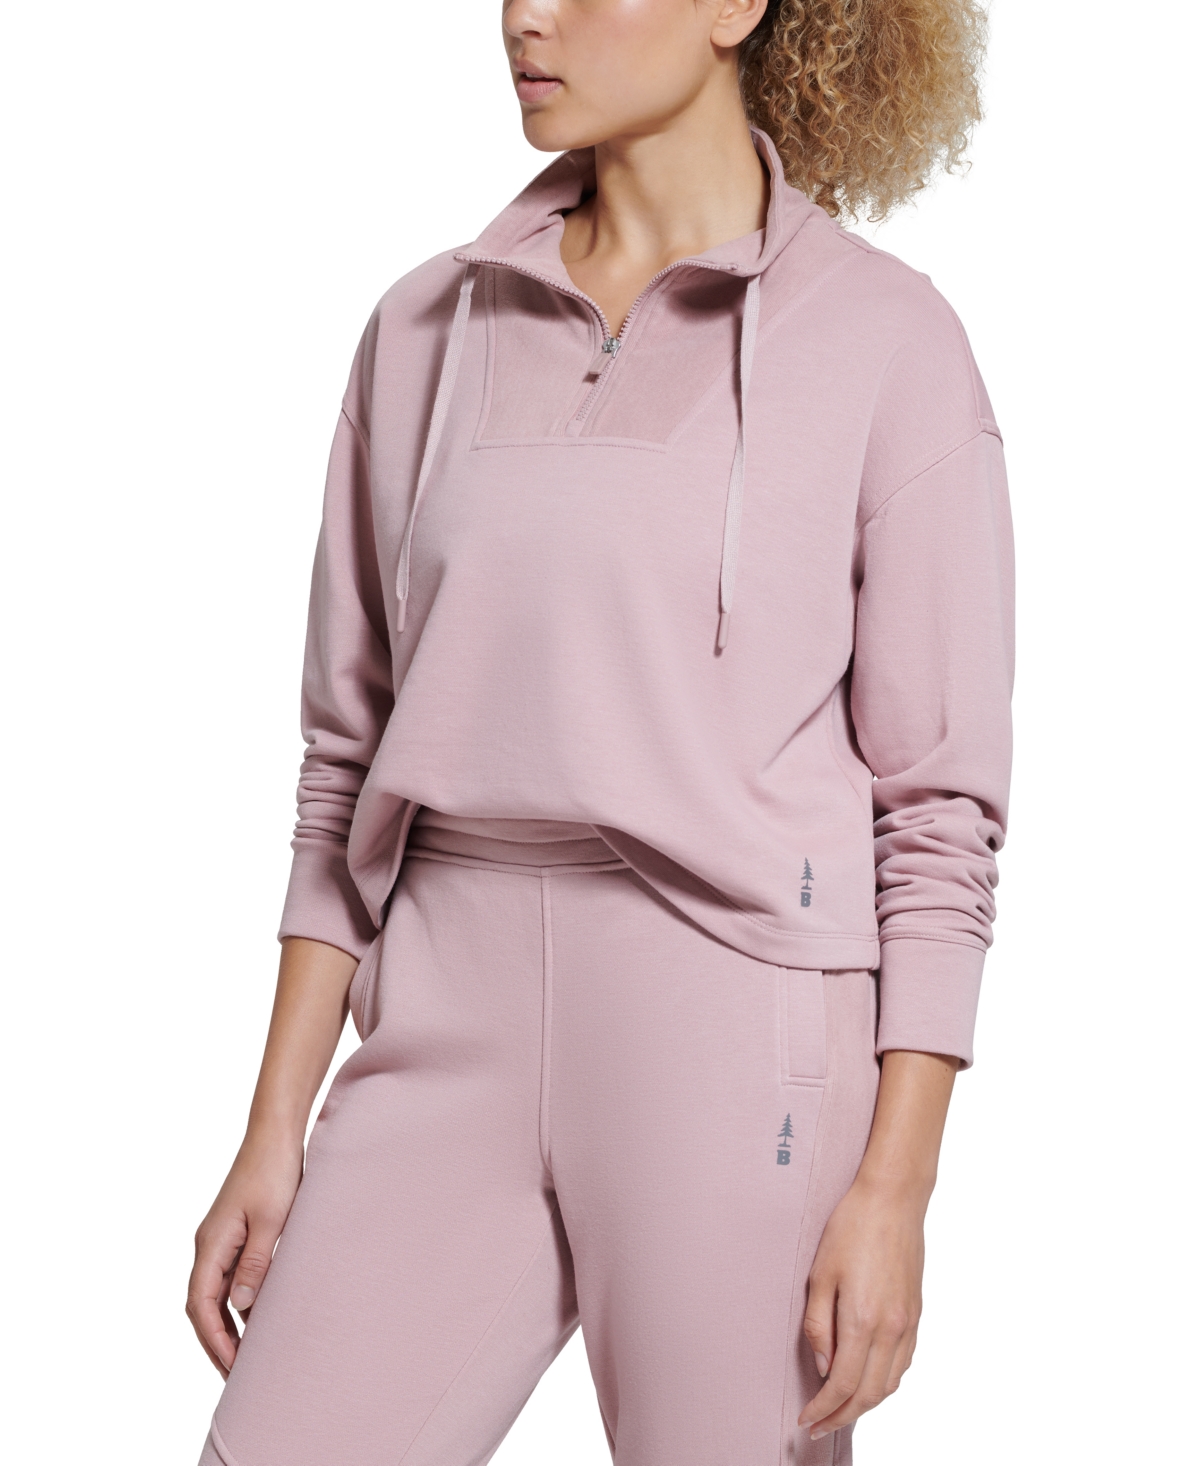 Bass Outdoor Women's French Terry Half Zip Sweatshirt Pink Size Small